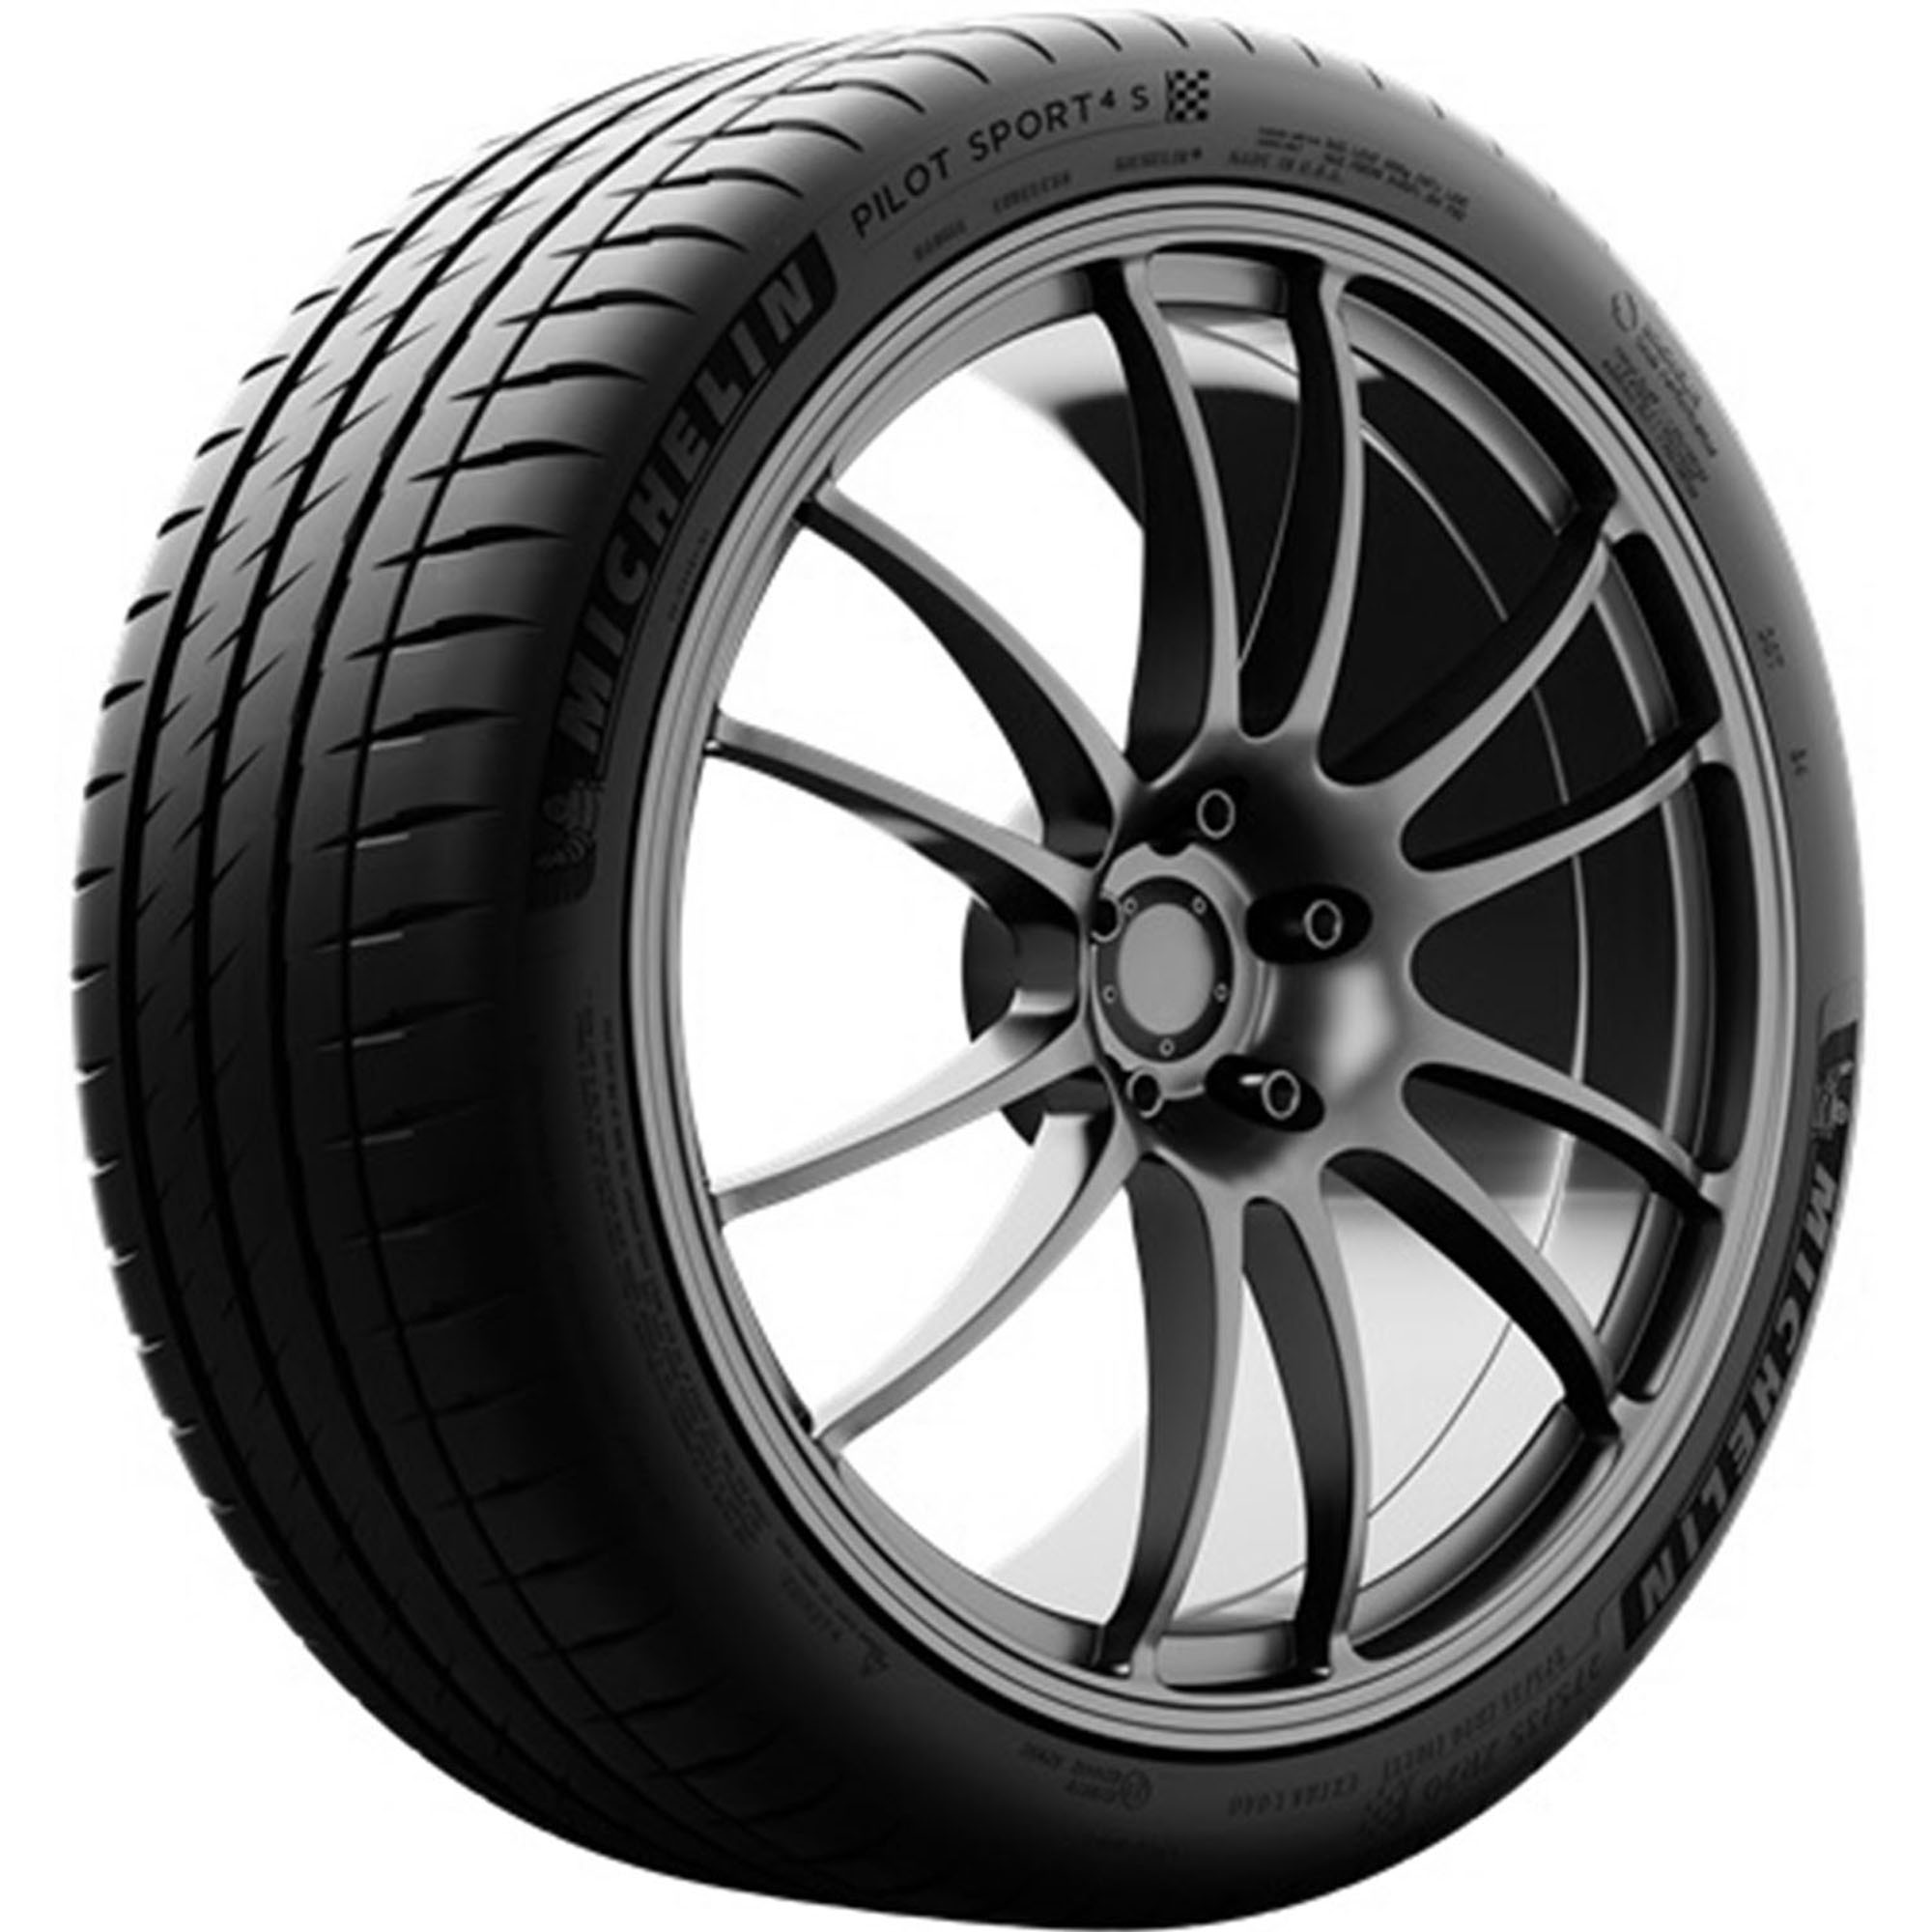 Michelin Pilot Sport 4S Performance 235/35ZR19 (91Y) XL Passenger Tire - image 1 of 4